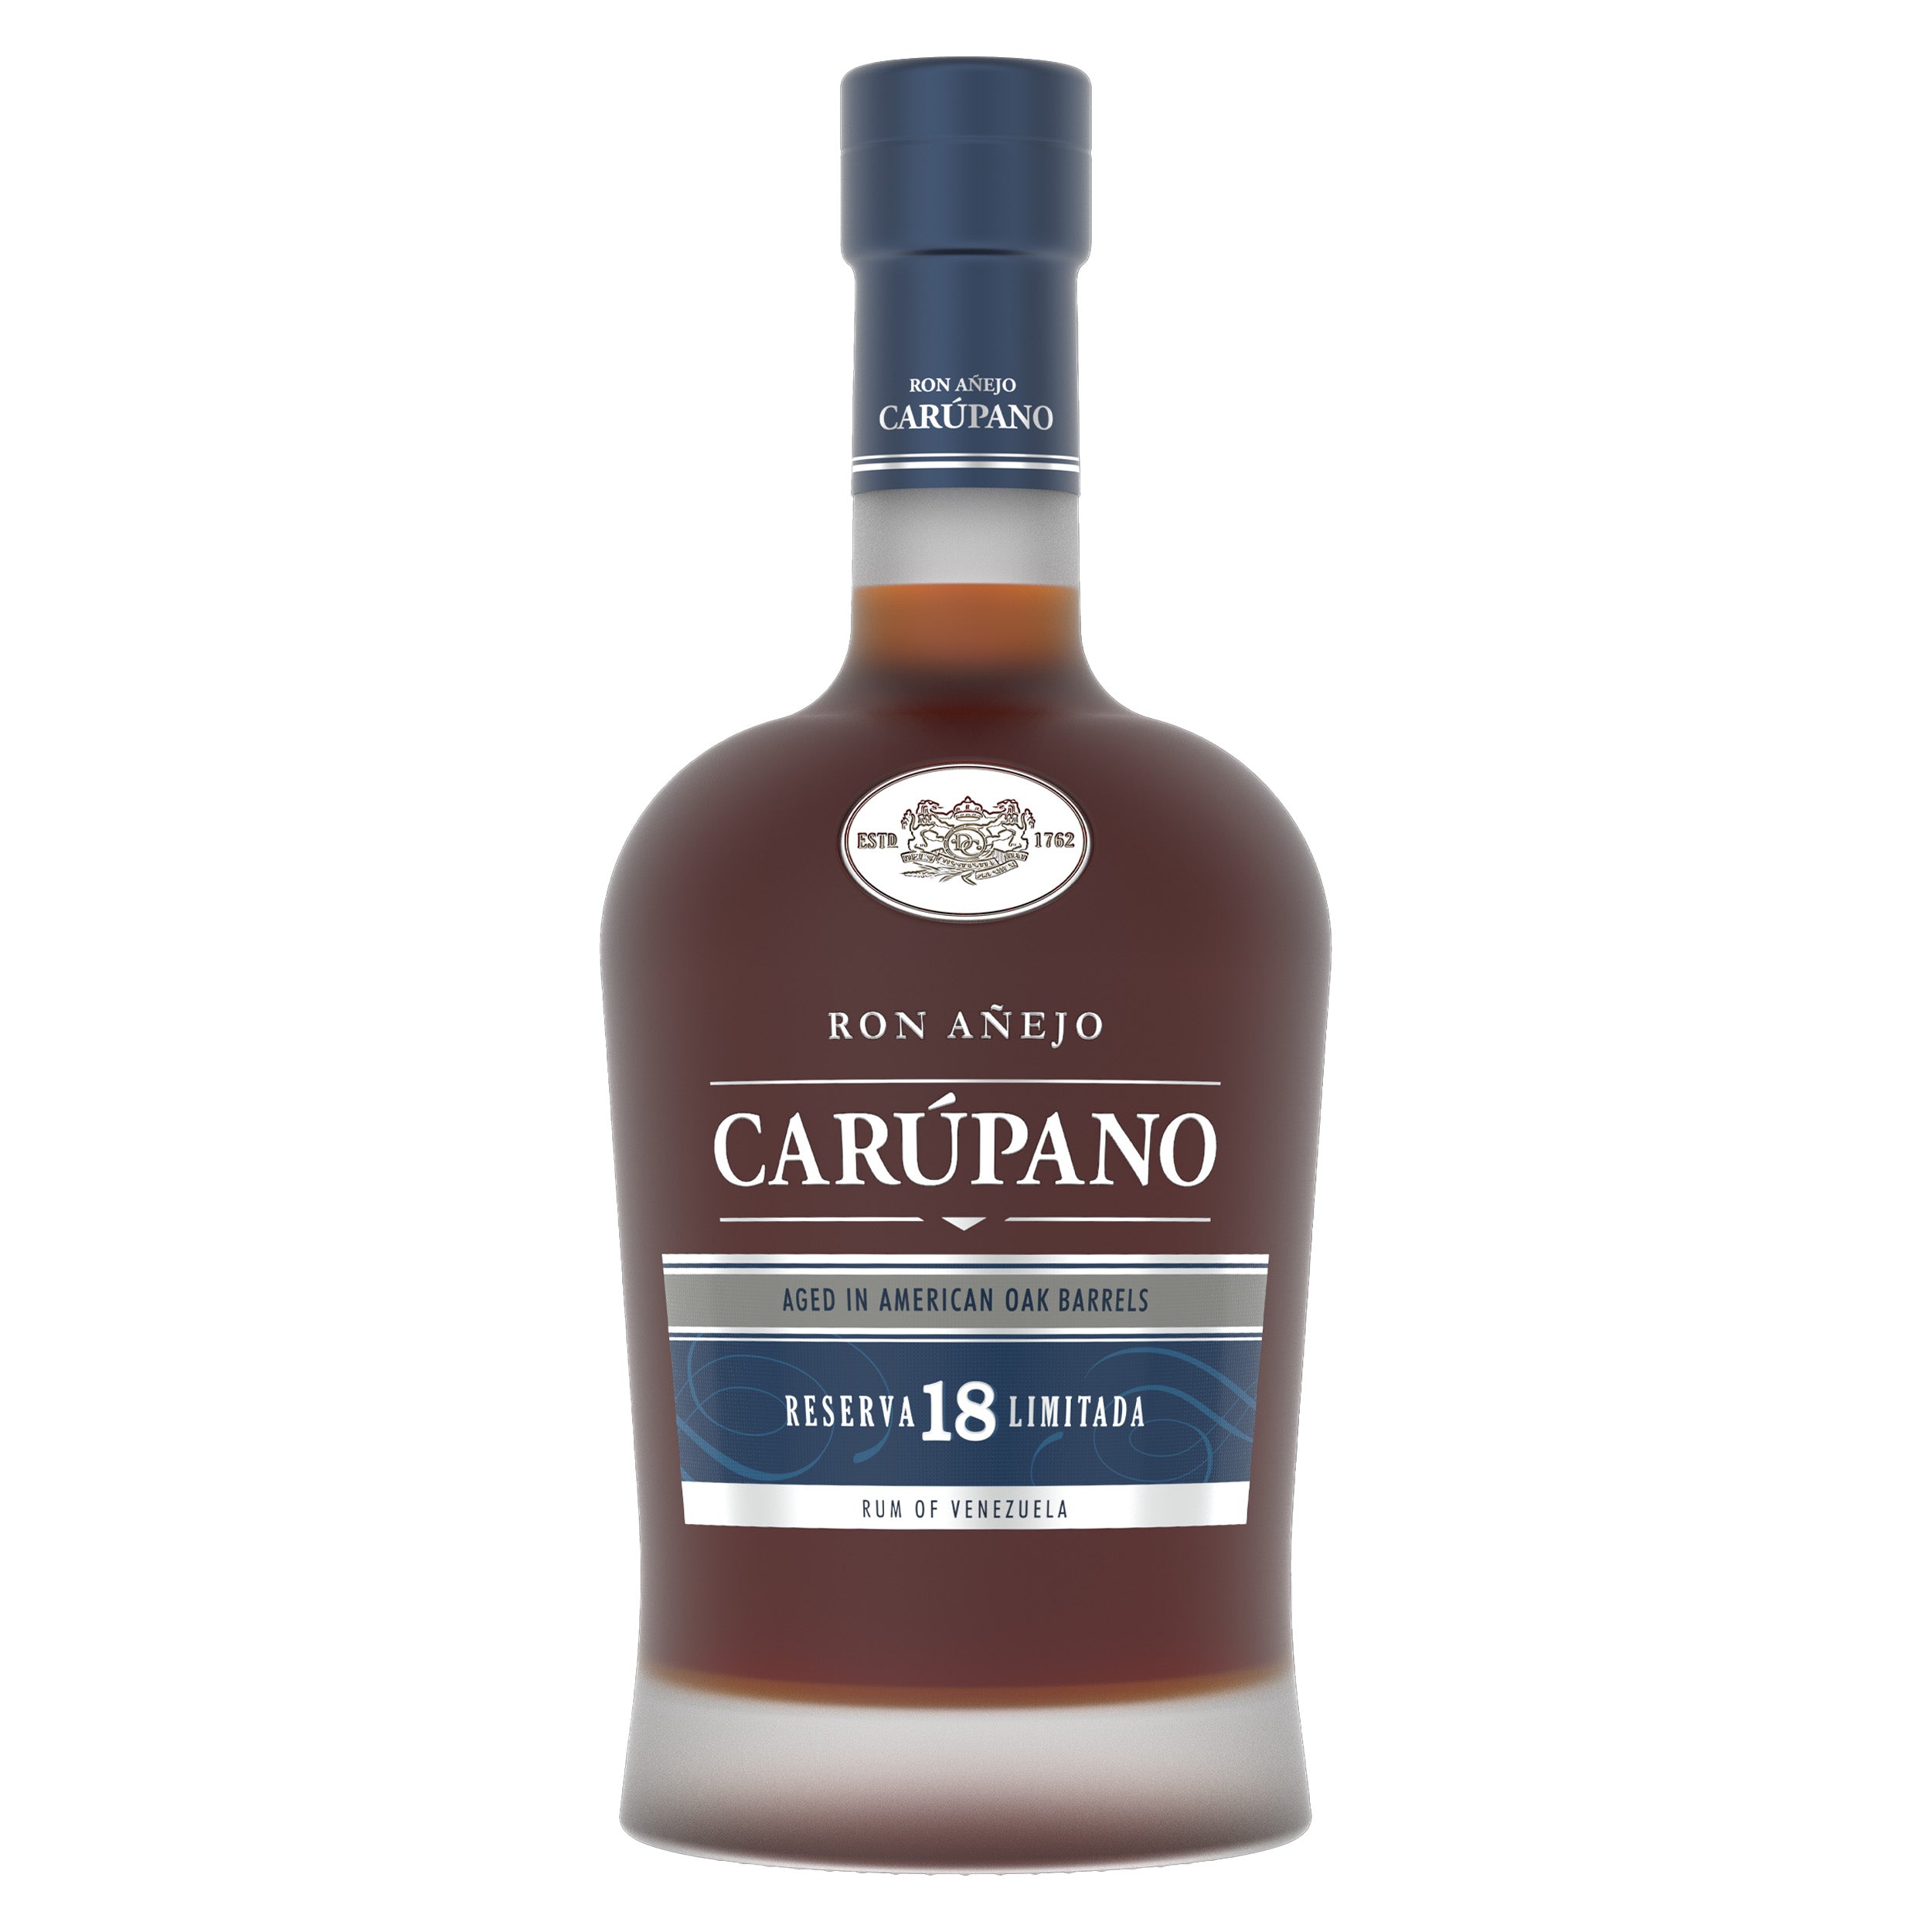 Ron Anejo Carupano Reserva Exclusiva 18 Year Rum